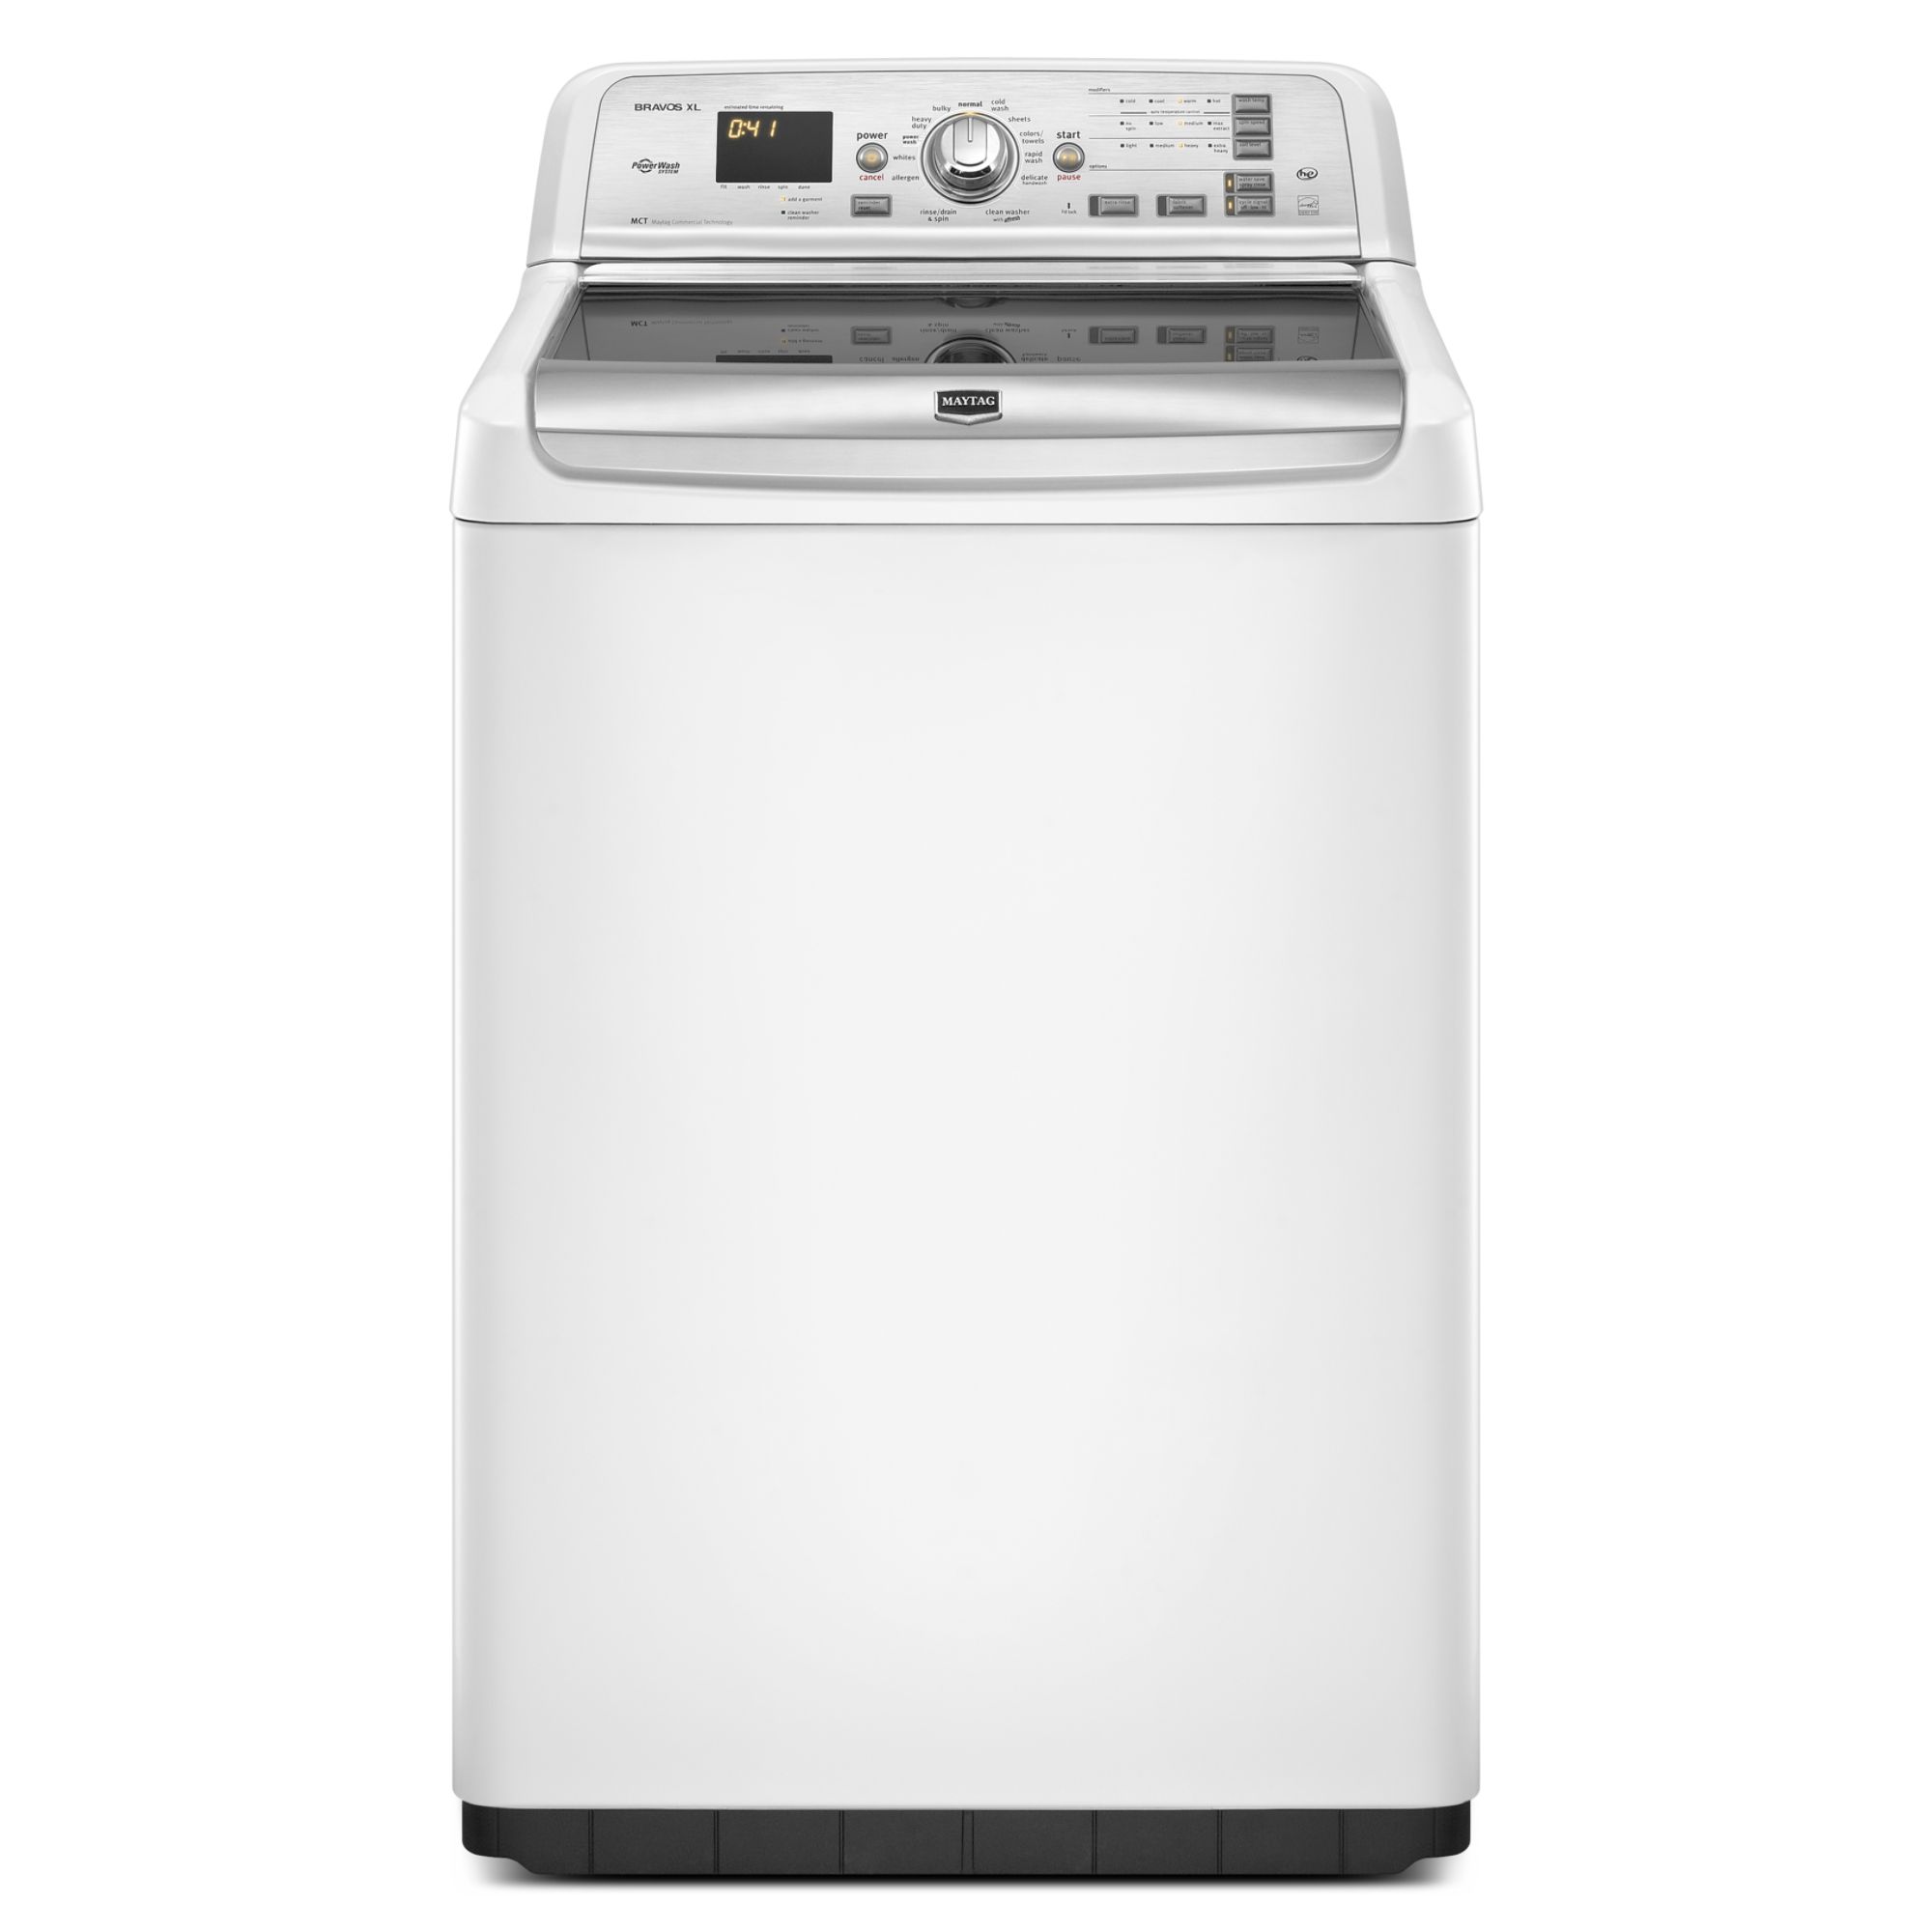 maytag-4-6-cu-ft-high-efficiency-top-load-washer-w-powerwash-white